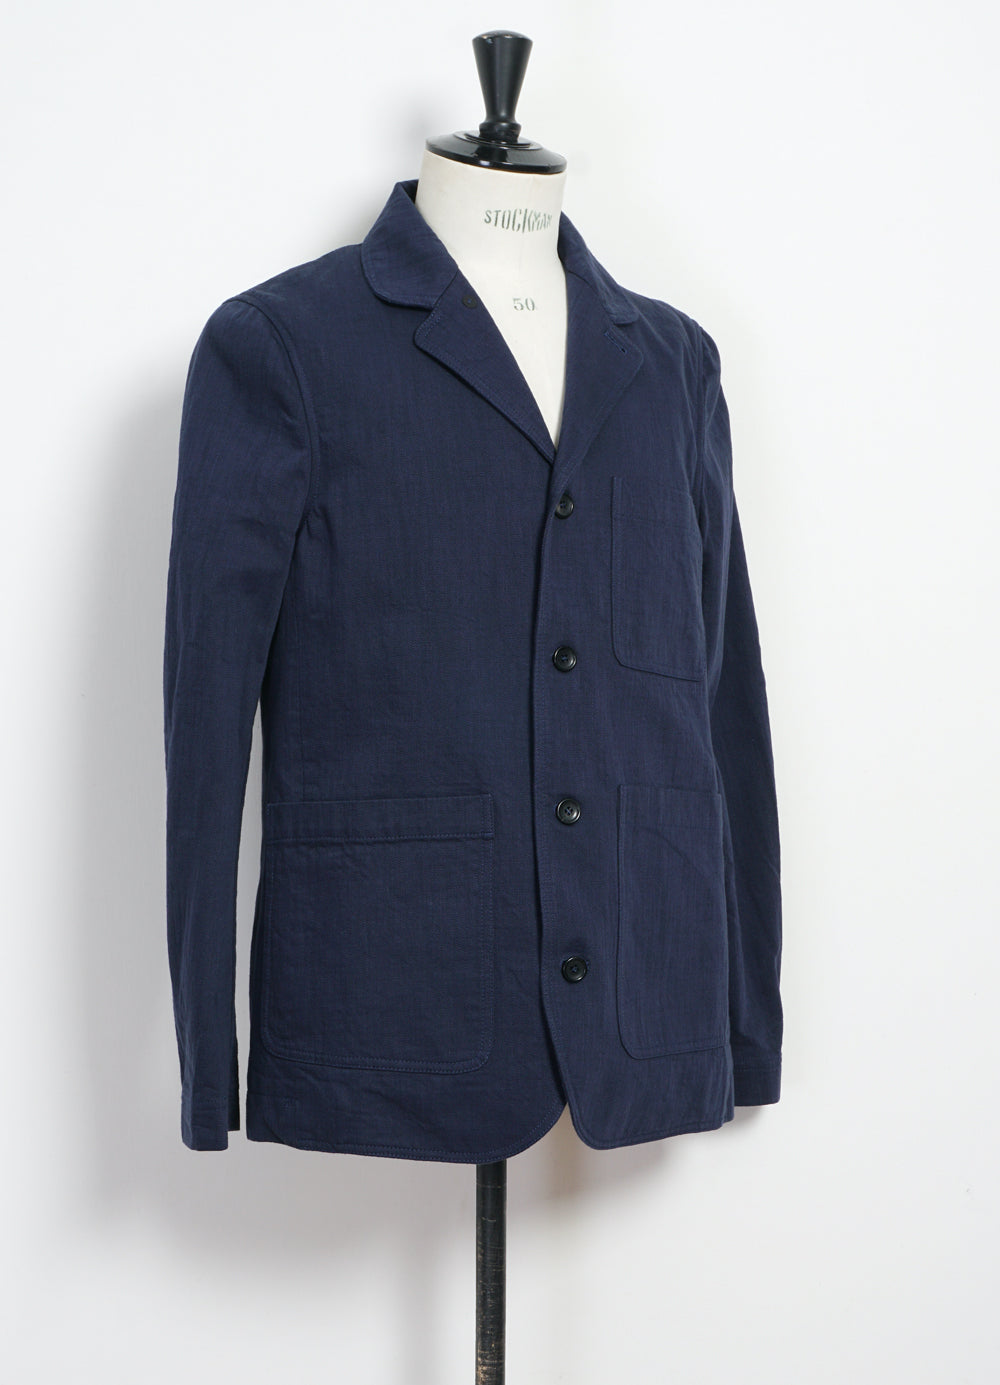 JOSEF | Refined Workwear Jacket | Navy Slub